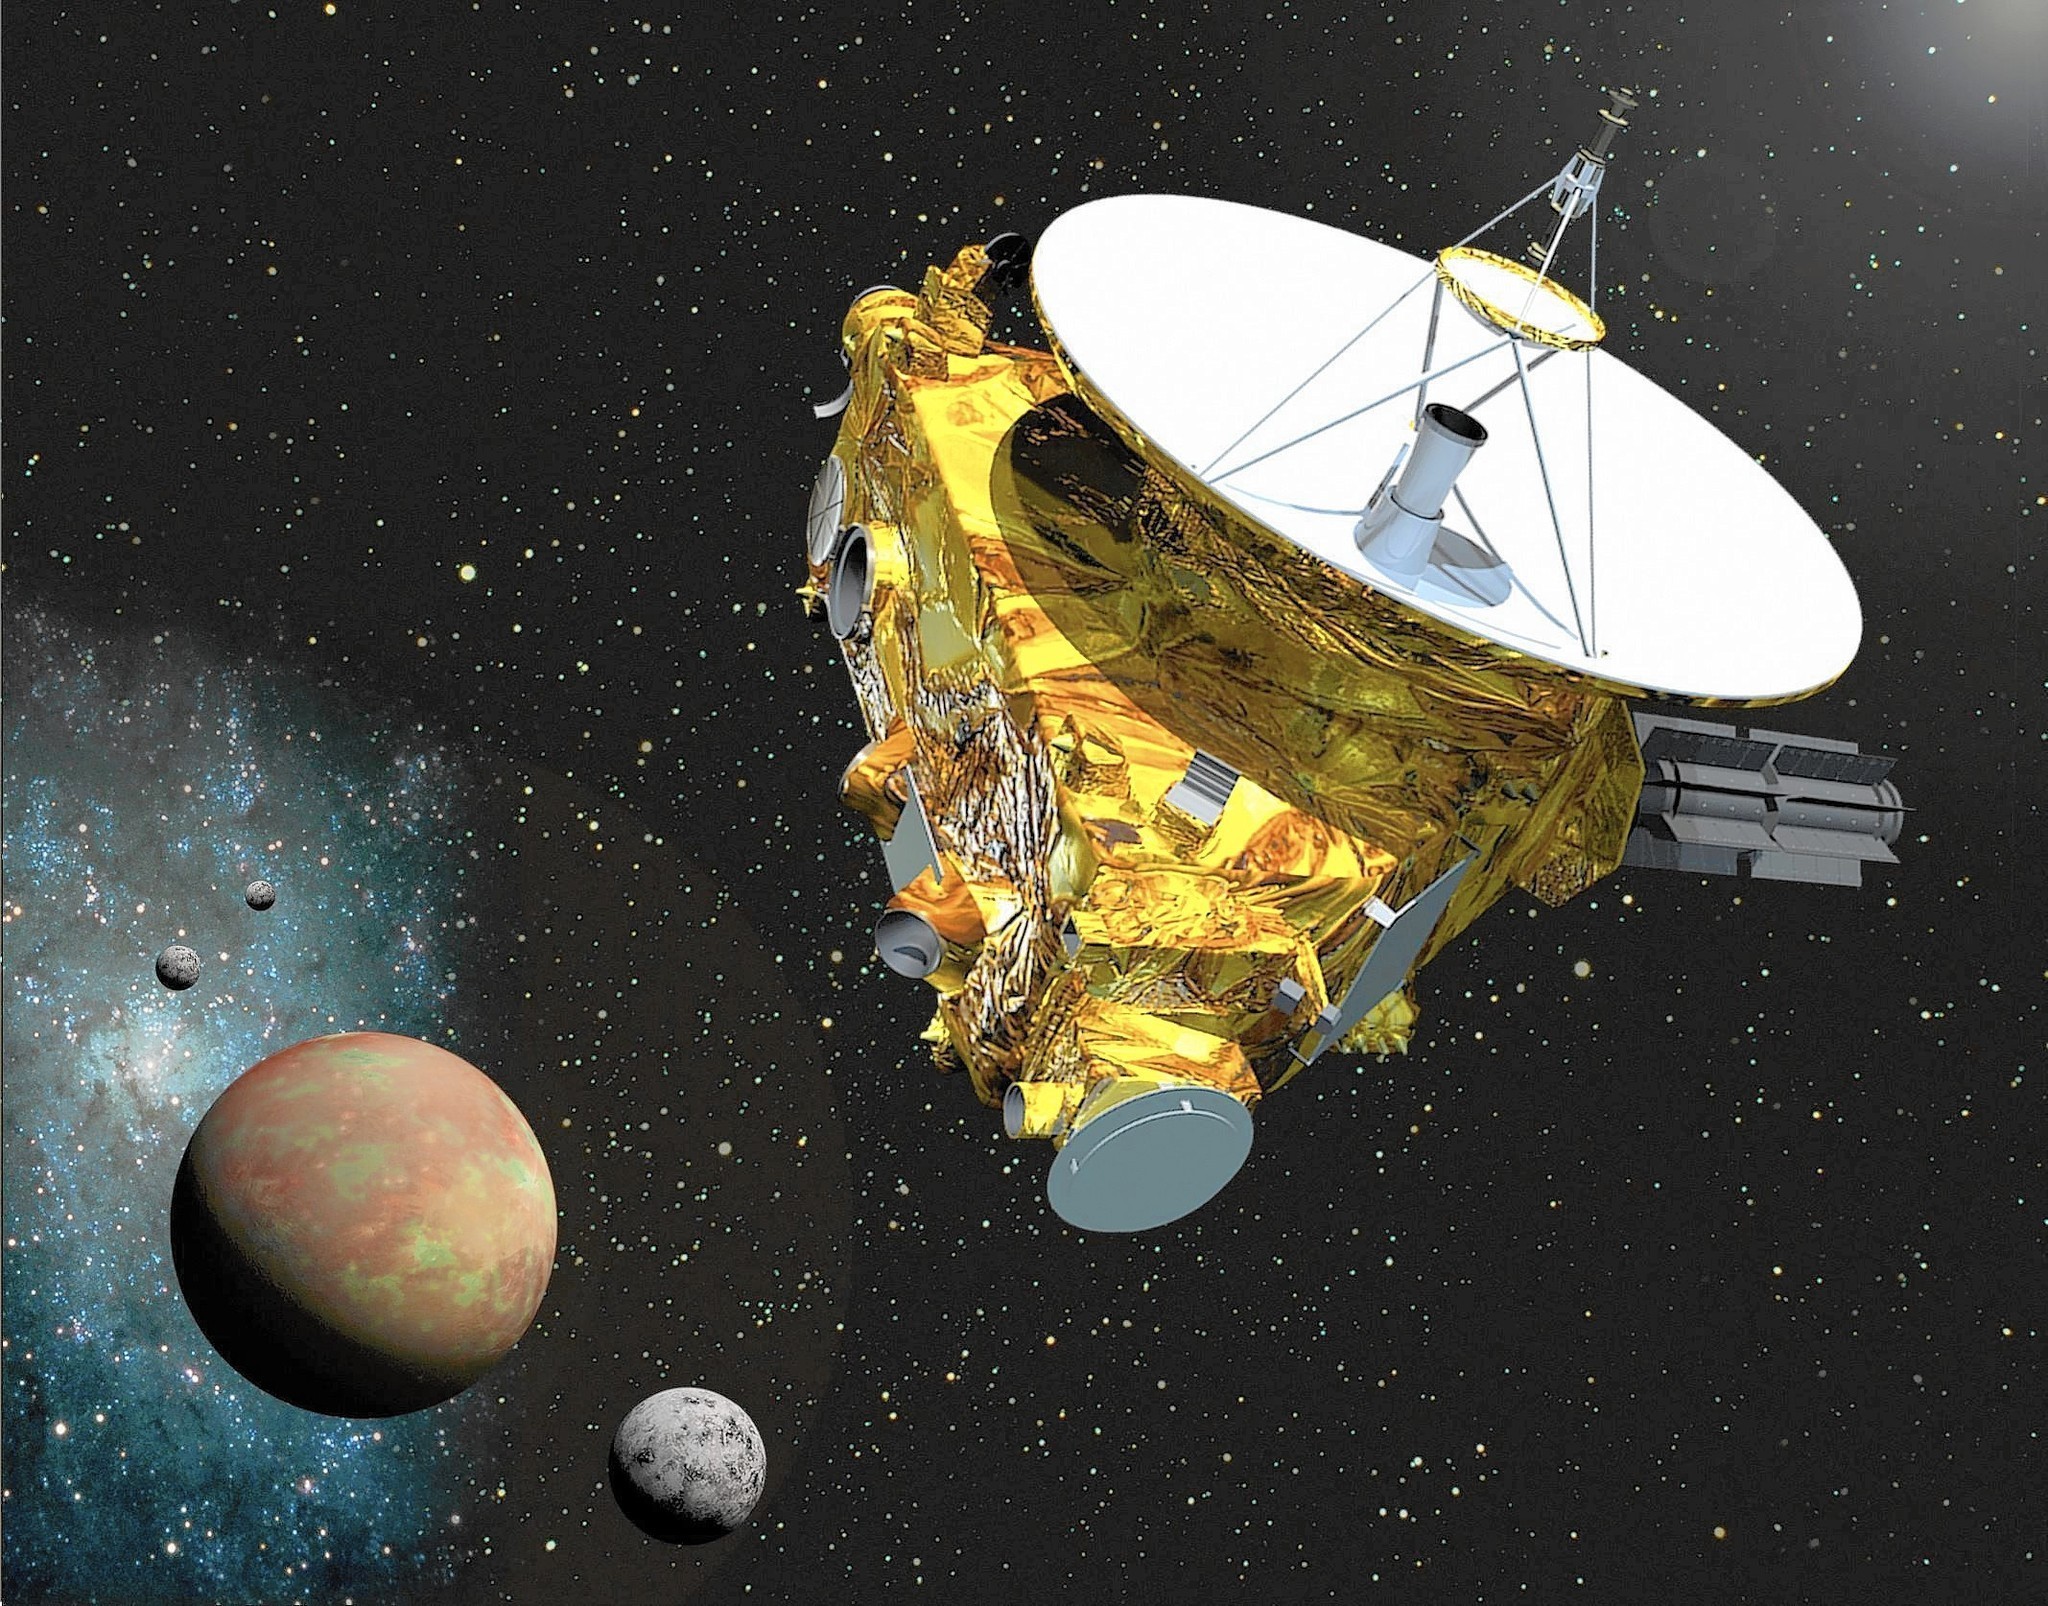 NASA's New Horizons spacecraft zooms in on Pluto